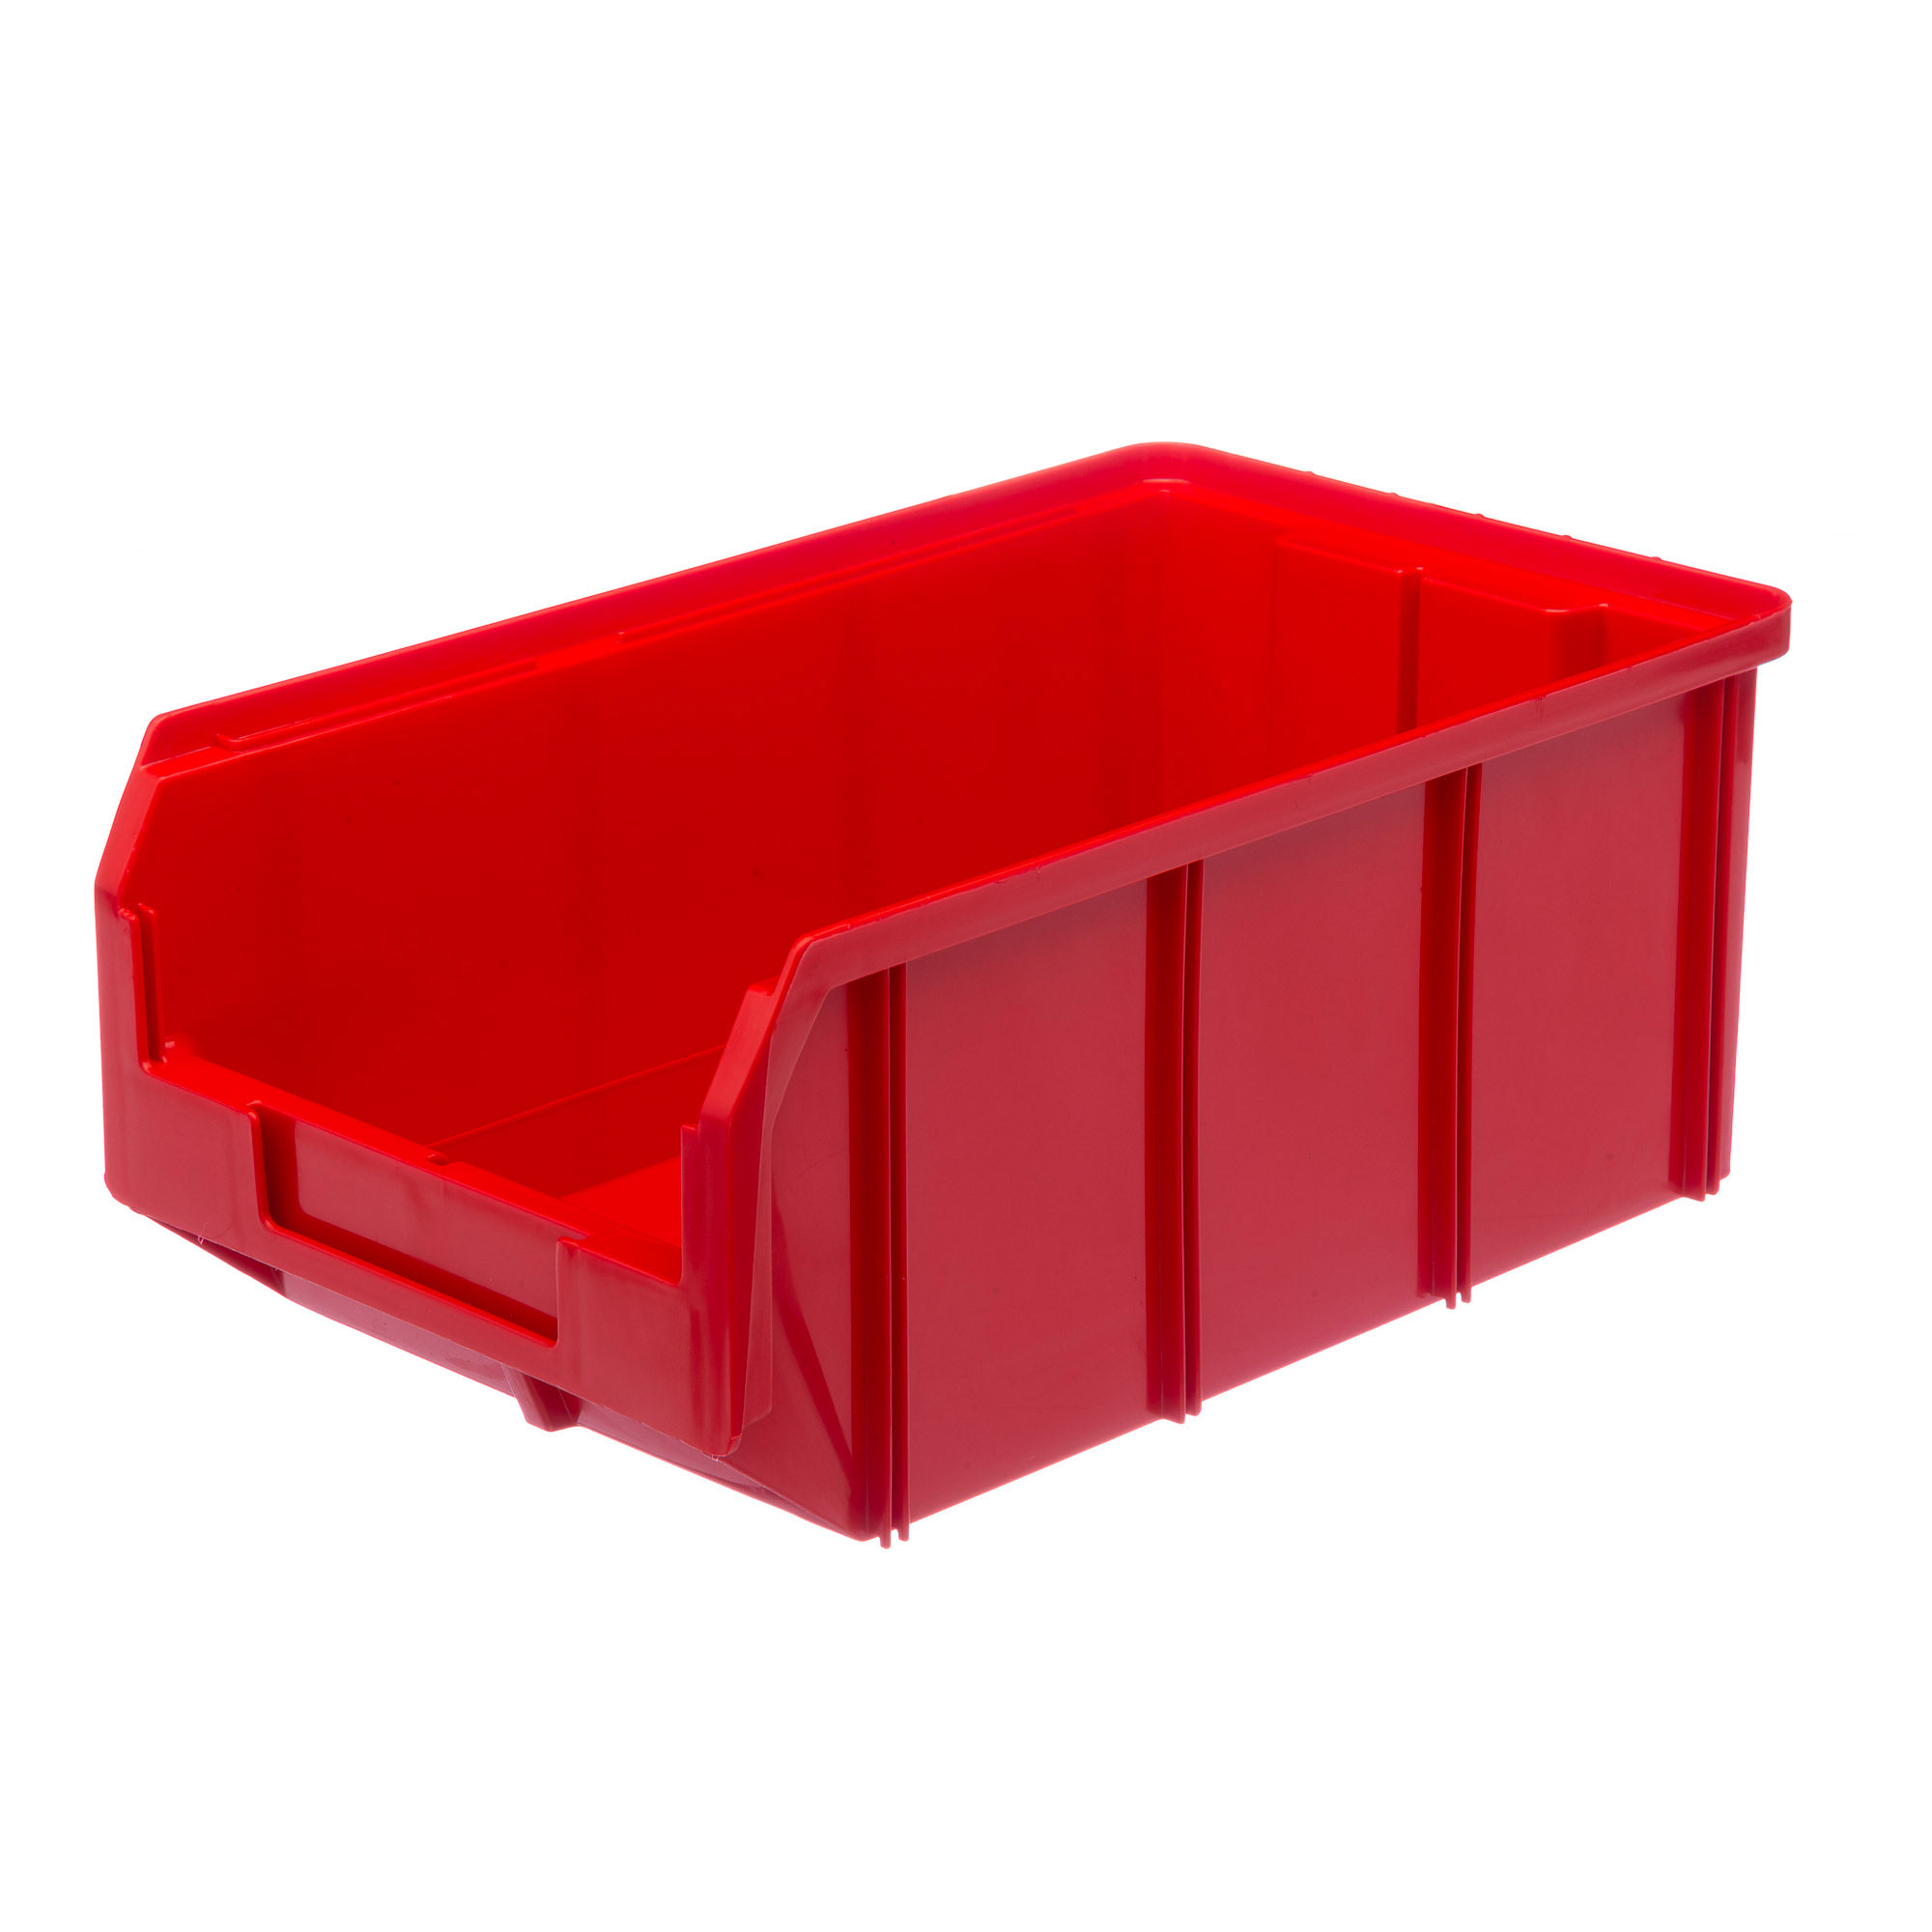 Пластиковый ящик Стелла-техник V-3-красный 342х207x143мм, 9,4 литра пластиковый короб стелла техник с 2 красный прозрачный 140х250х100мм